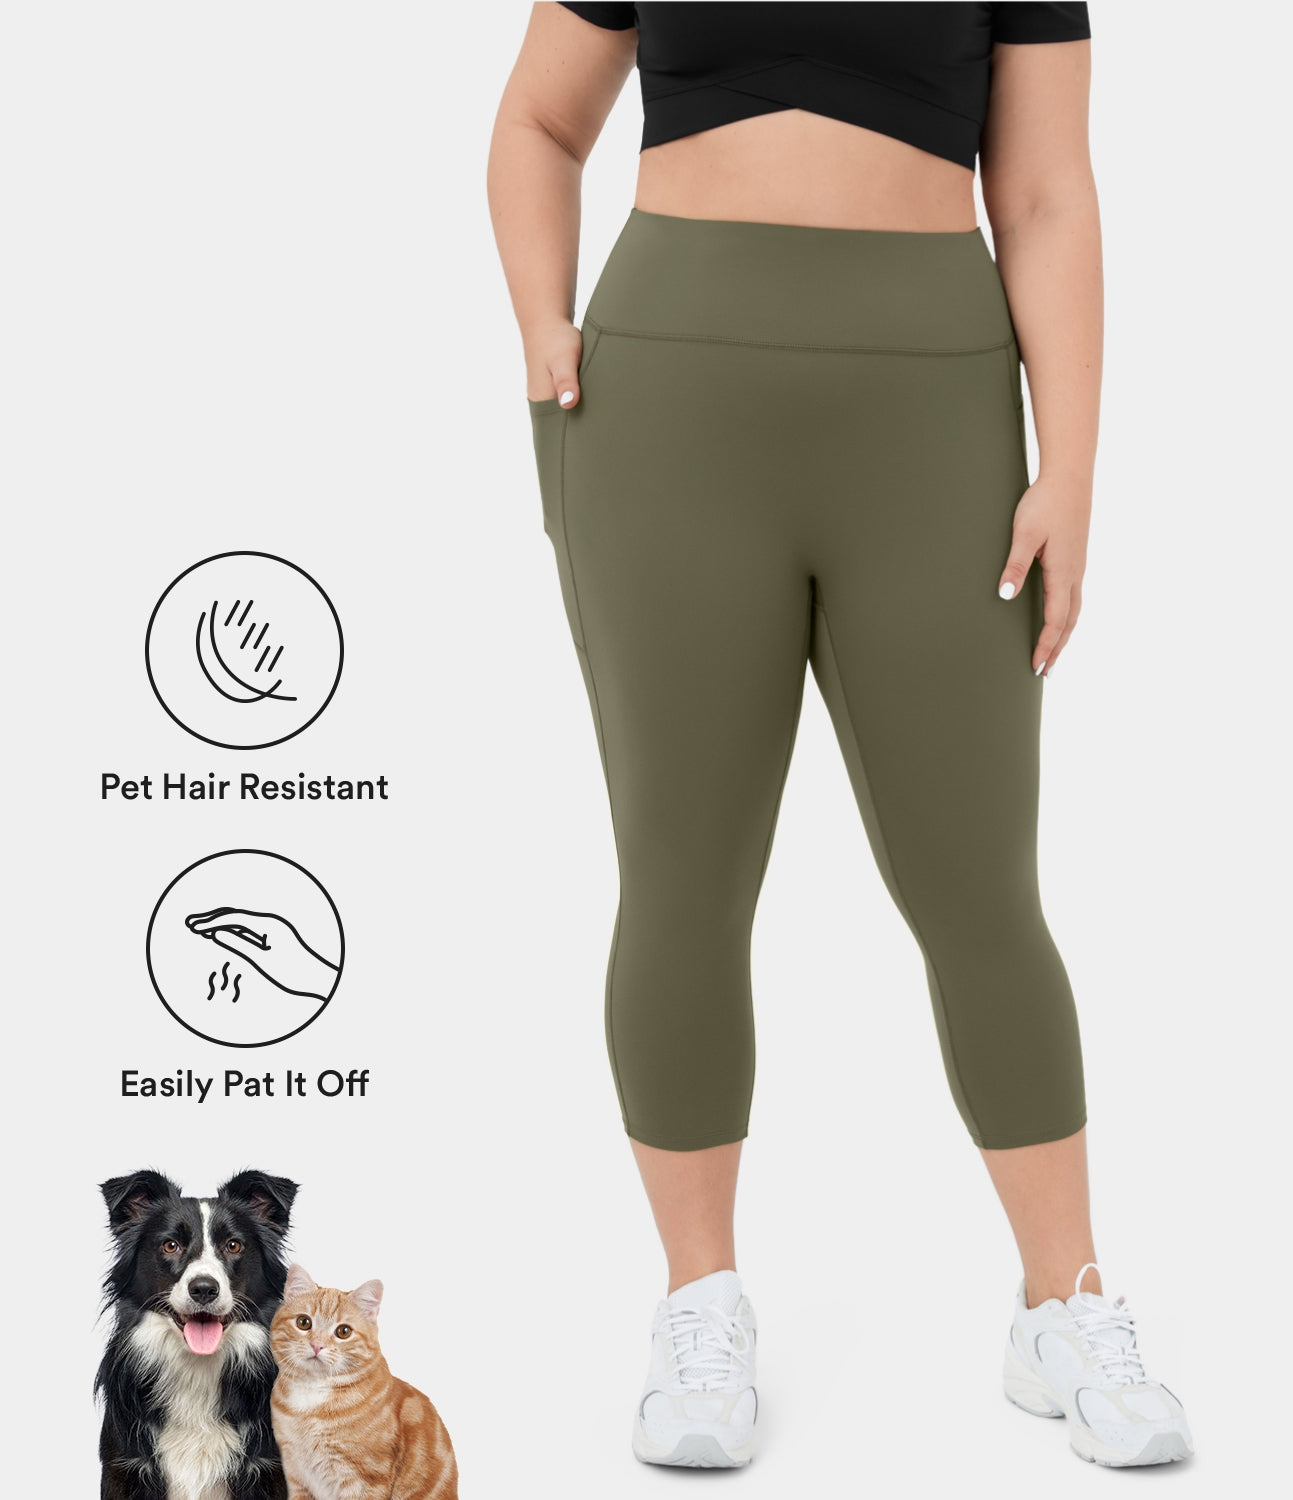 

Halara PatitoffВ® Pet Hair Resistant High Waisted Side Pocket Plus Size Capri Yoga Leggings - Black